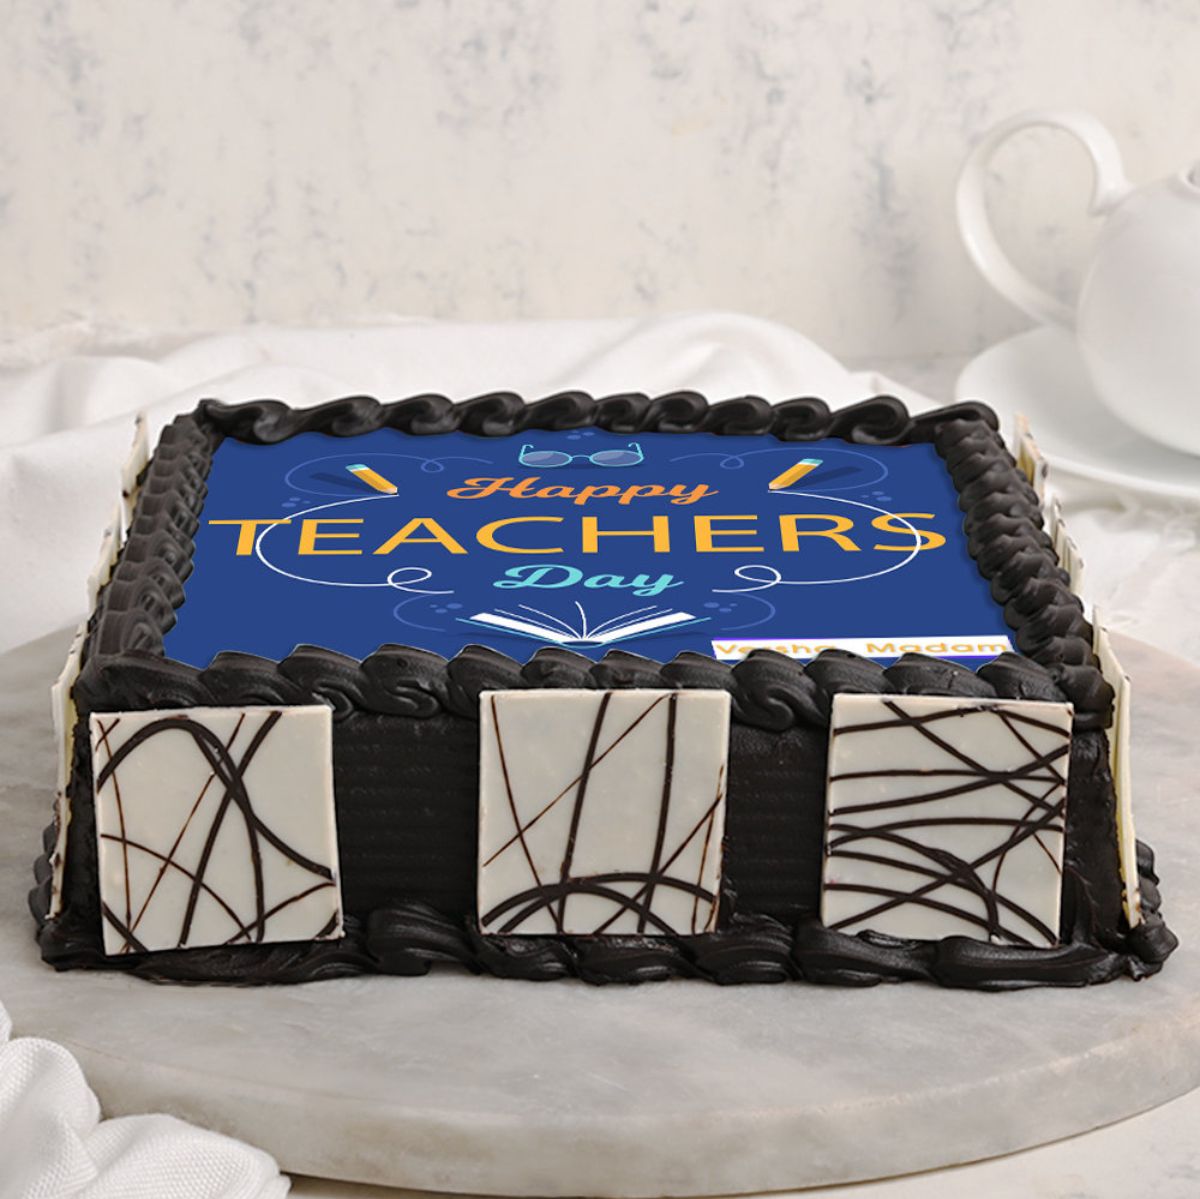 Happy Teacher's Day Poster Cake